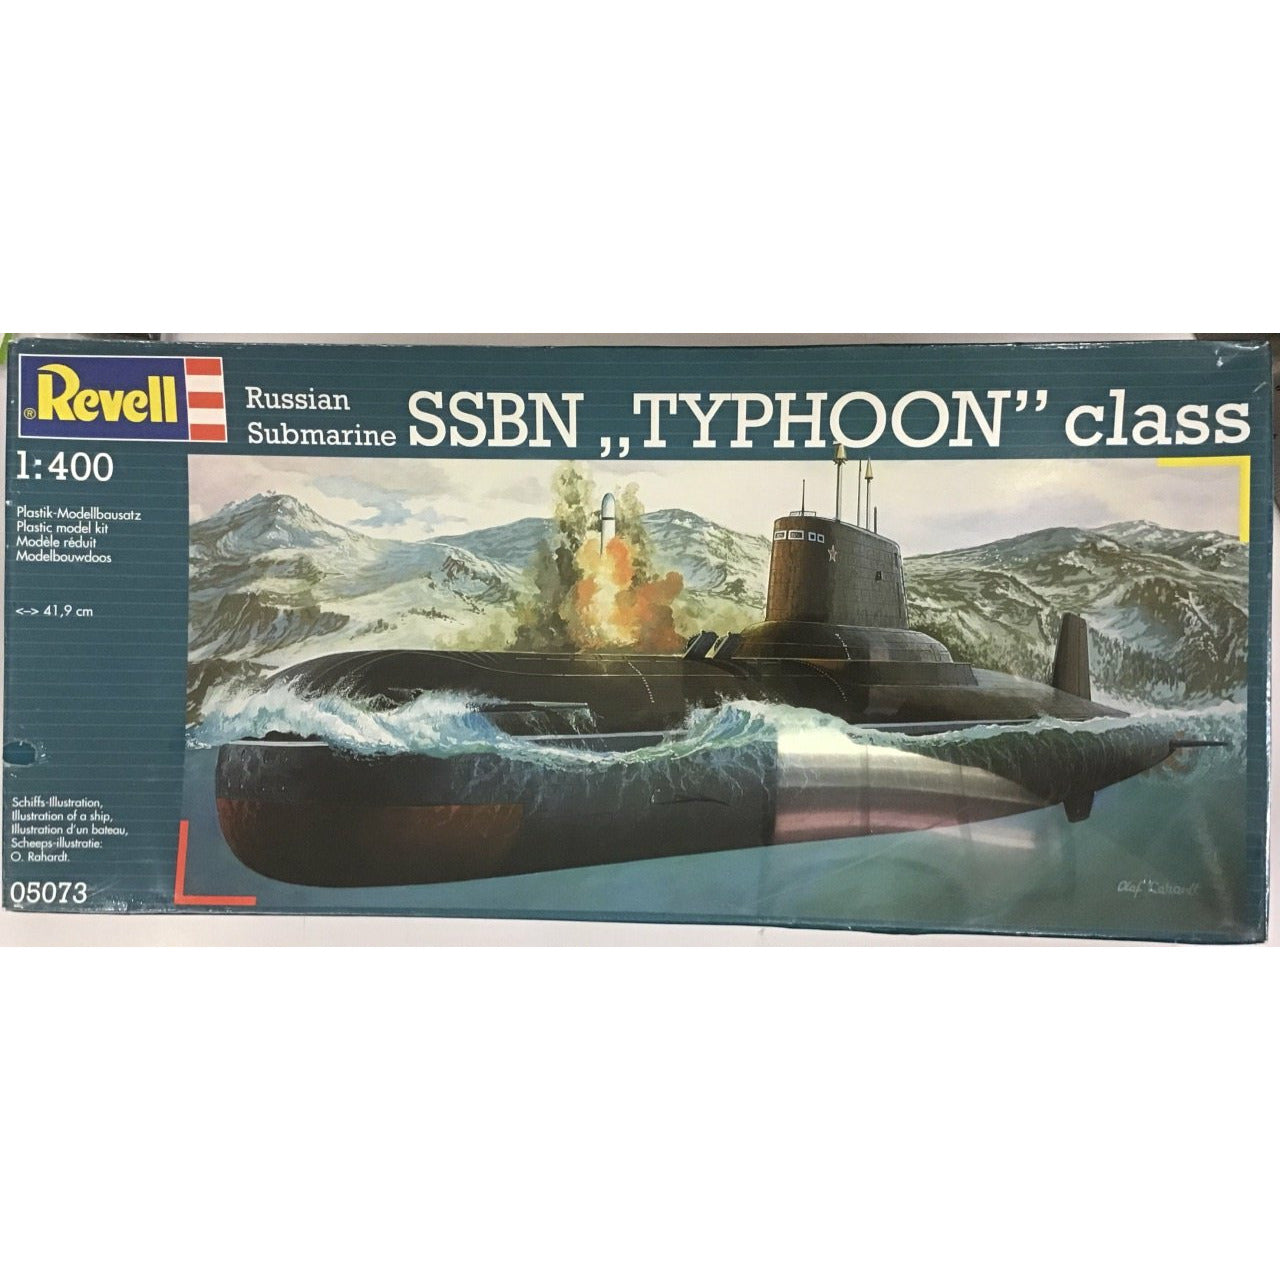 Russian Submarine SSBN "Typhoon" Class 1/400 Model Submarine Kit #5073 by Revell